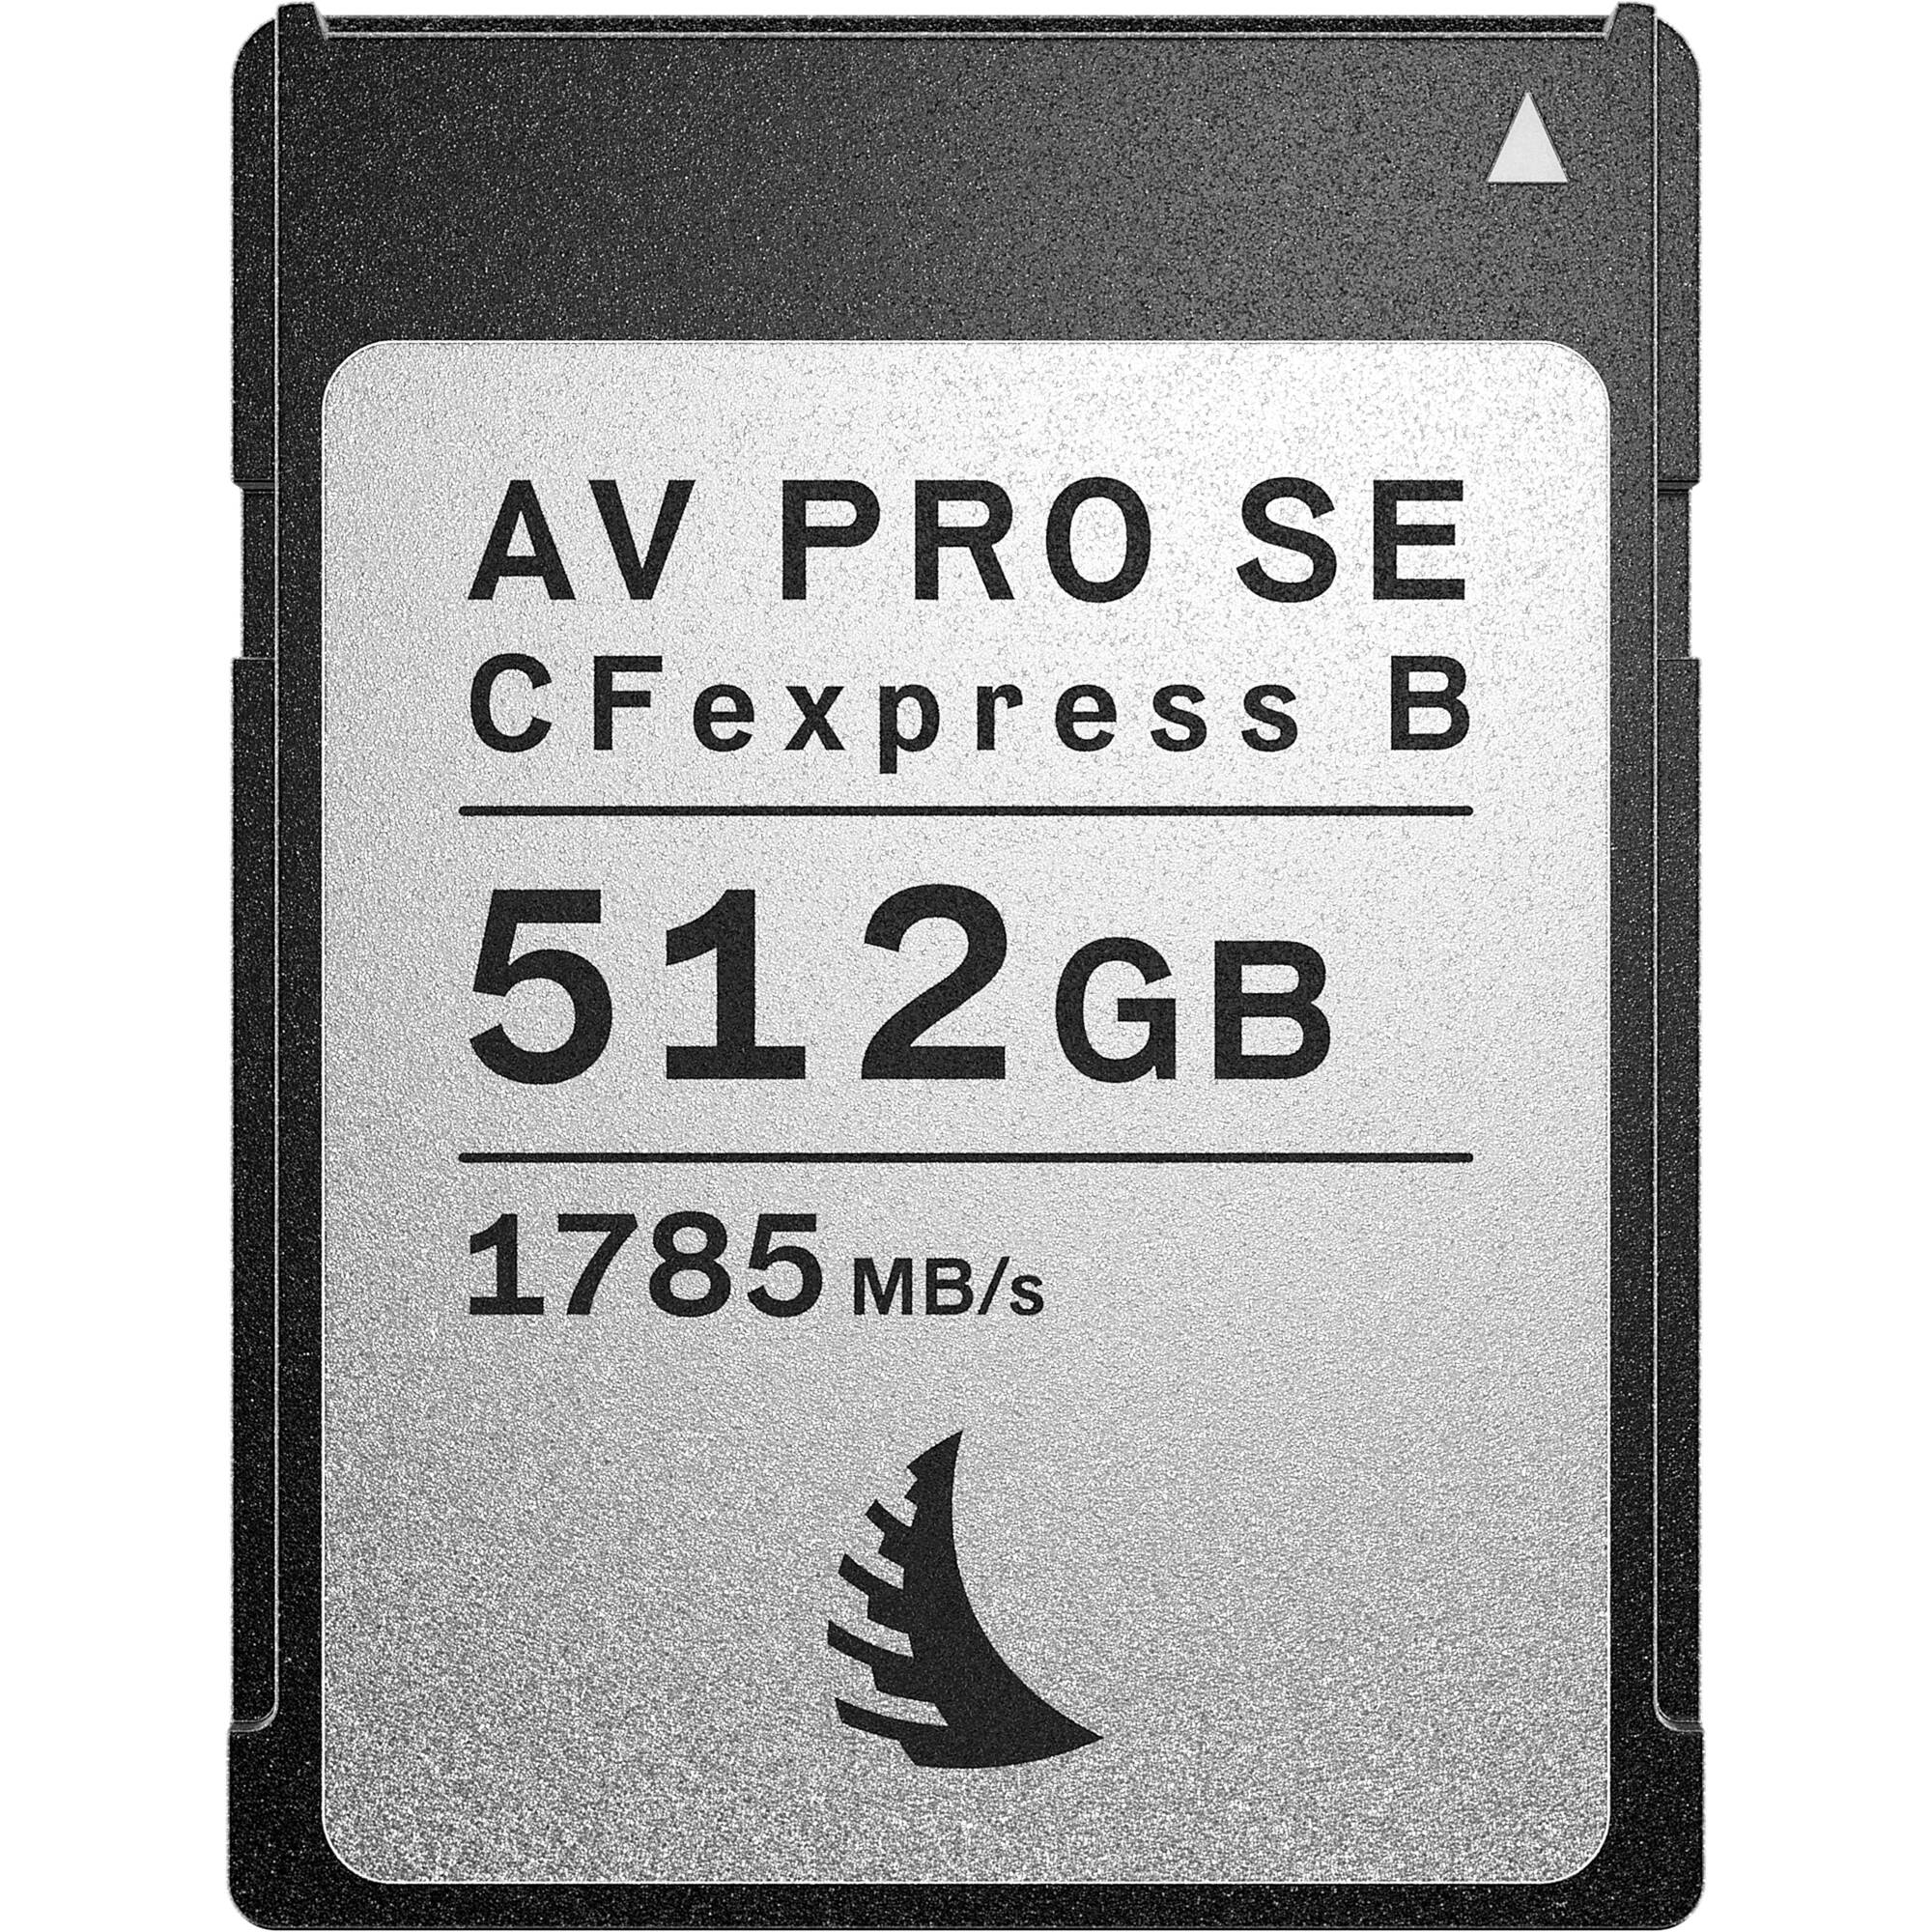 CFexpress Type B Memory Cards